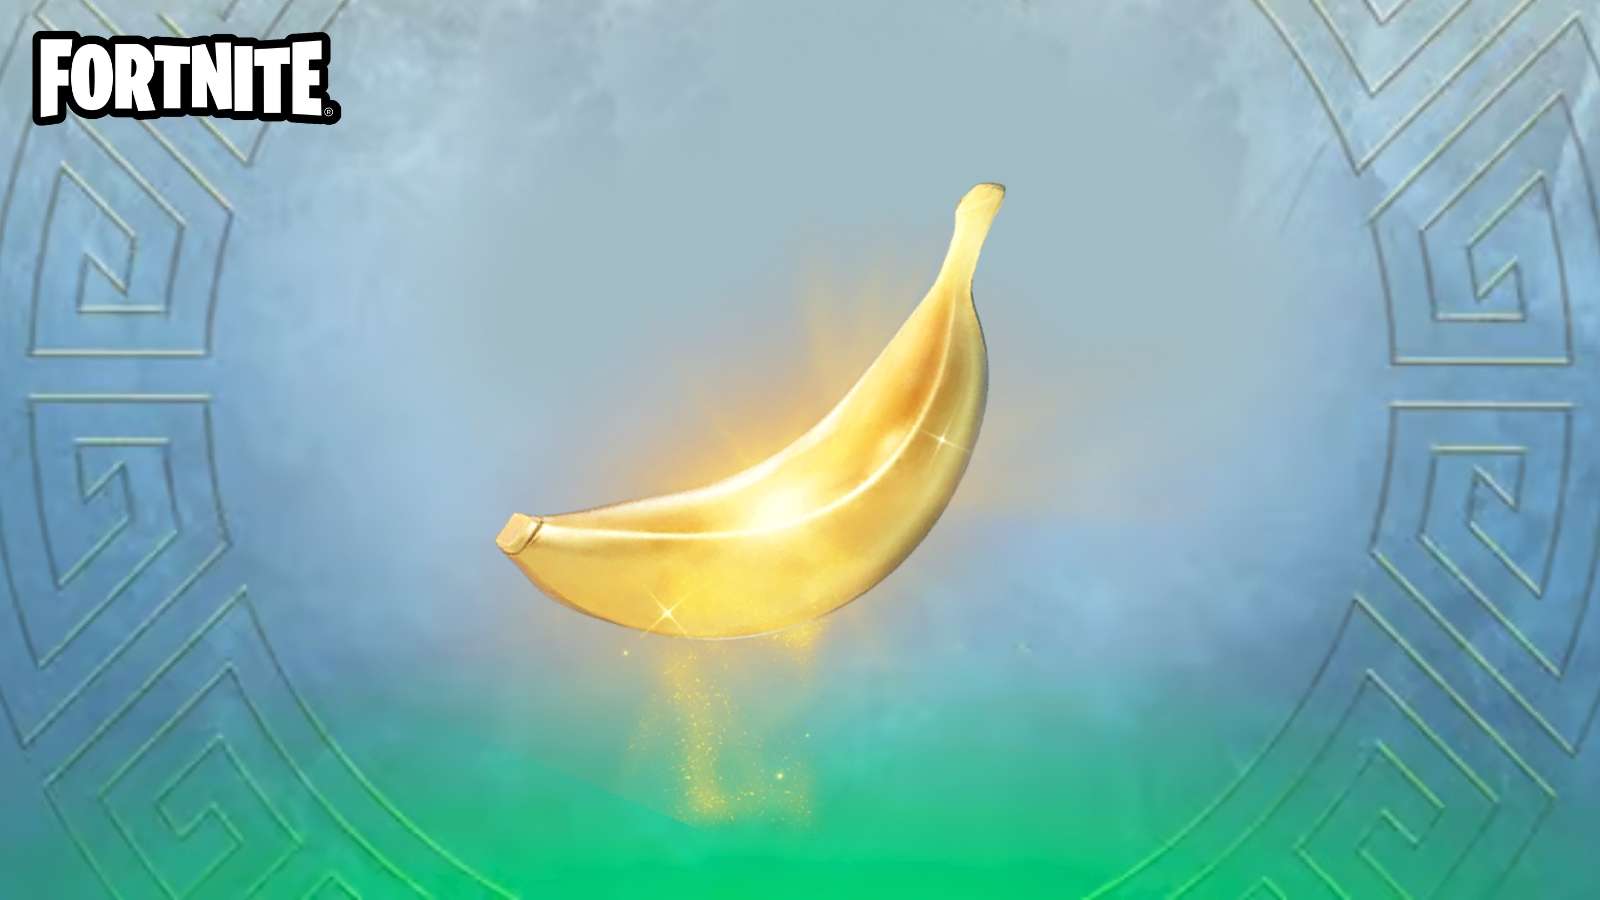 Fortnite Banana of the Gods mythic